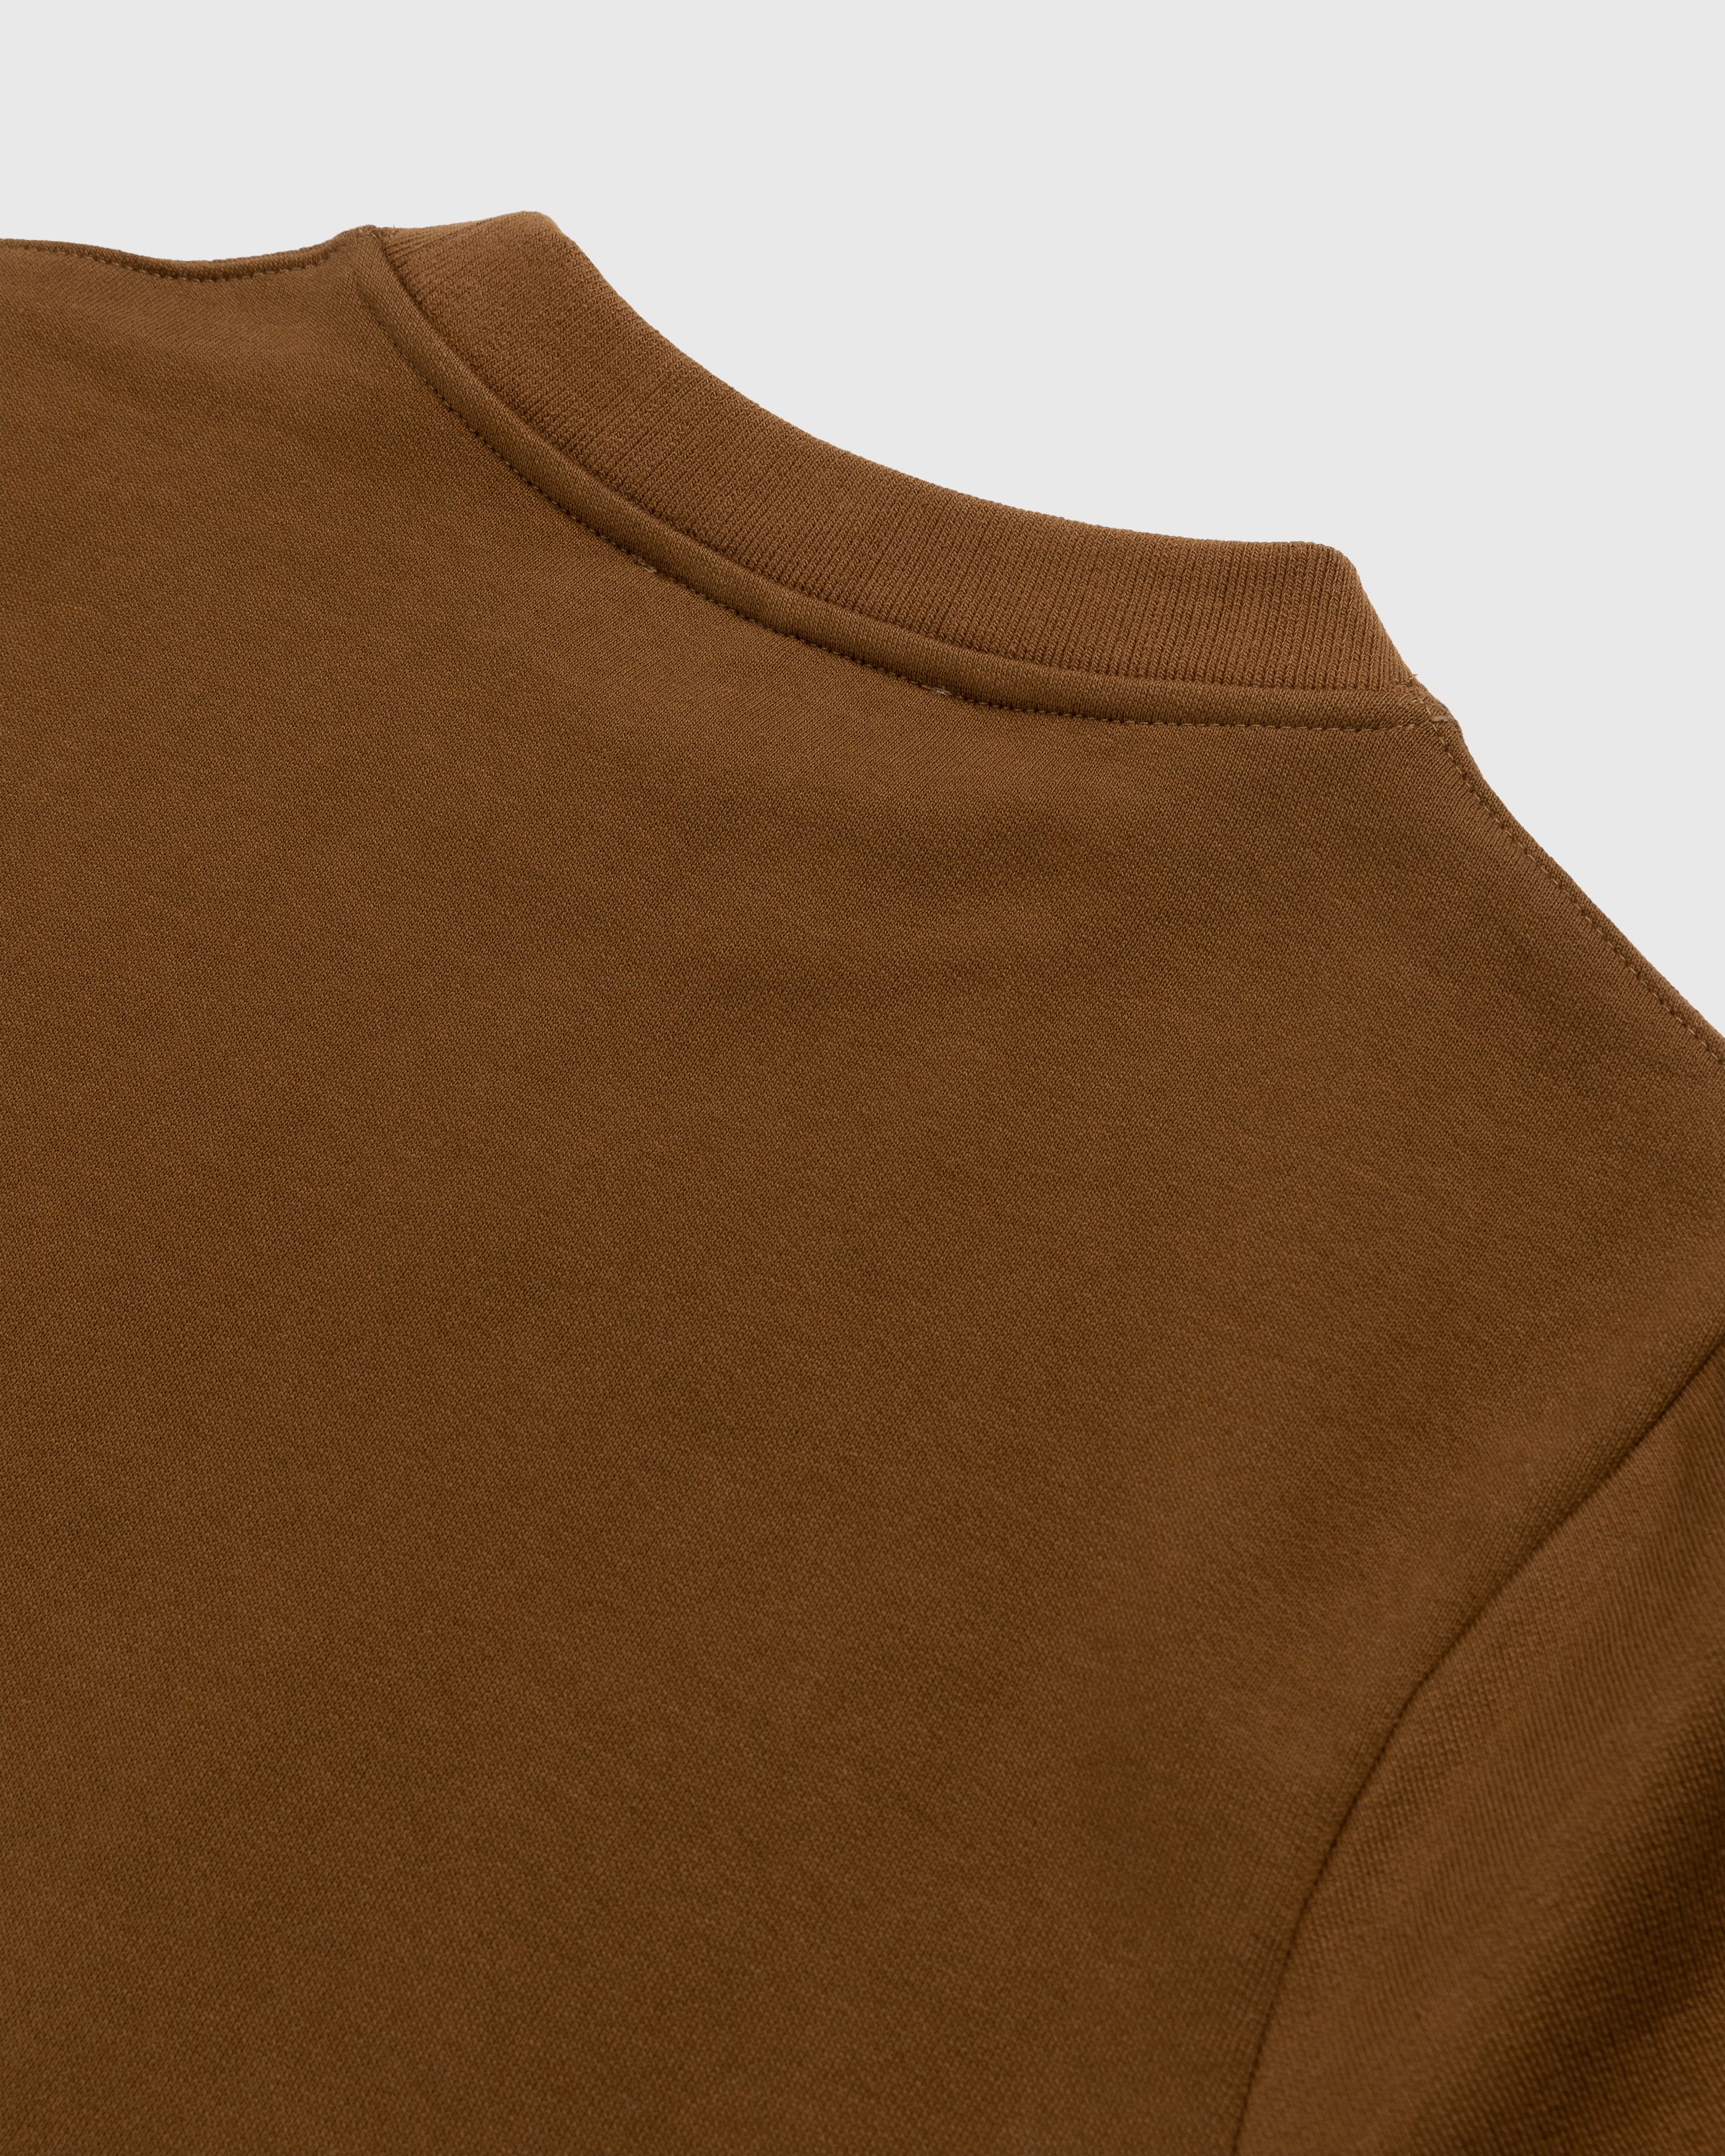 Wales Bonner - Original Sweatshirt Brown - Clothing - Brown - Image 3